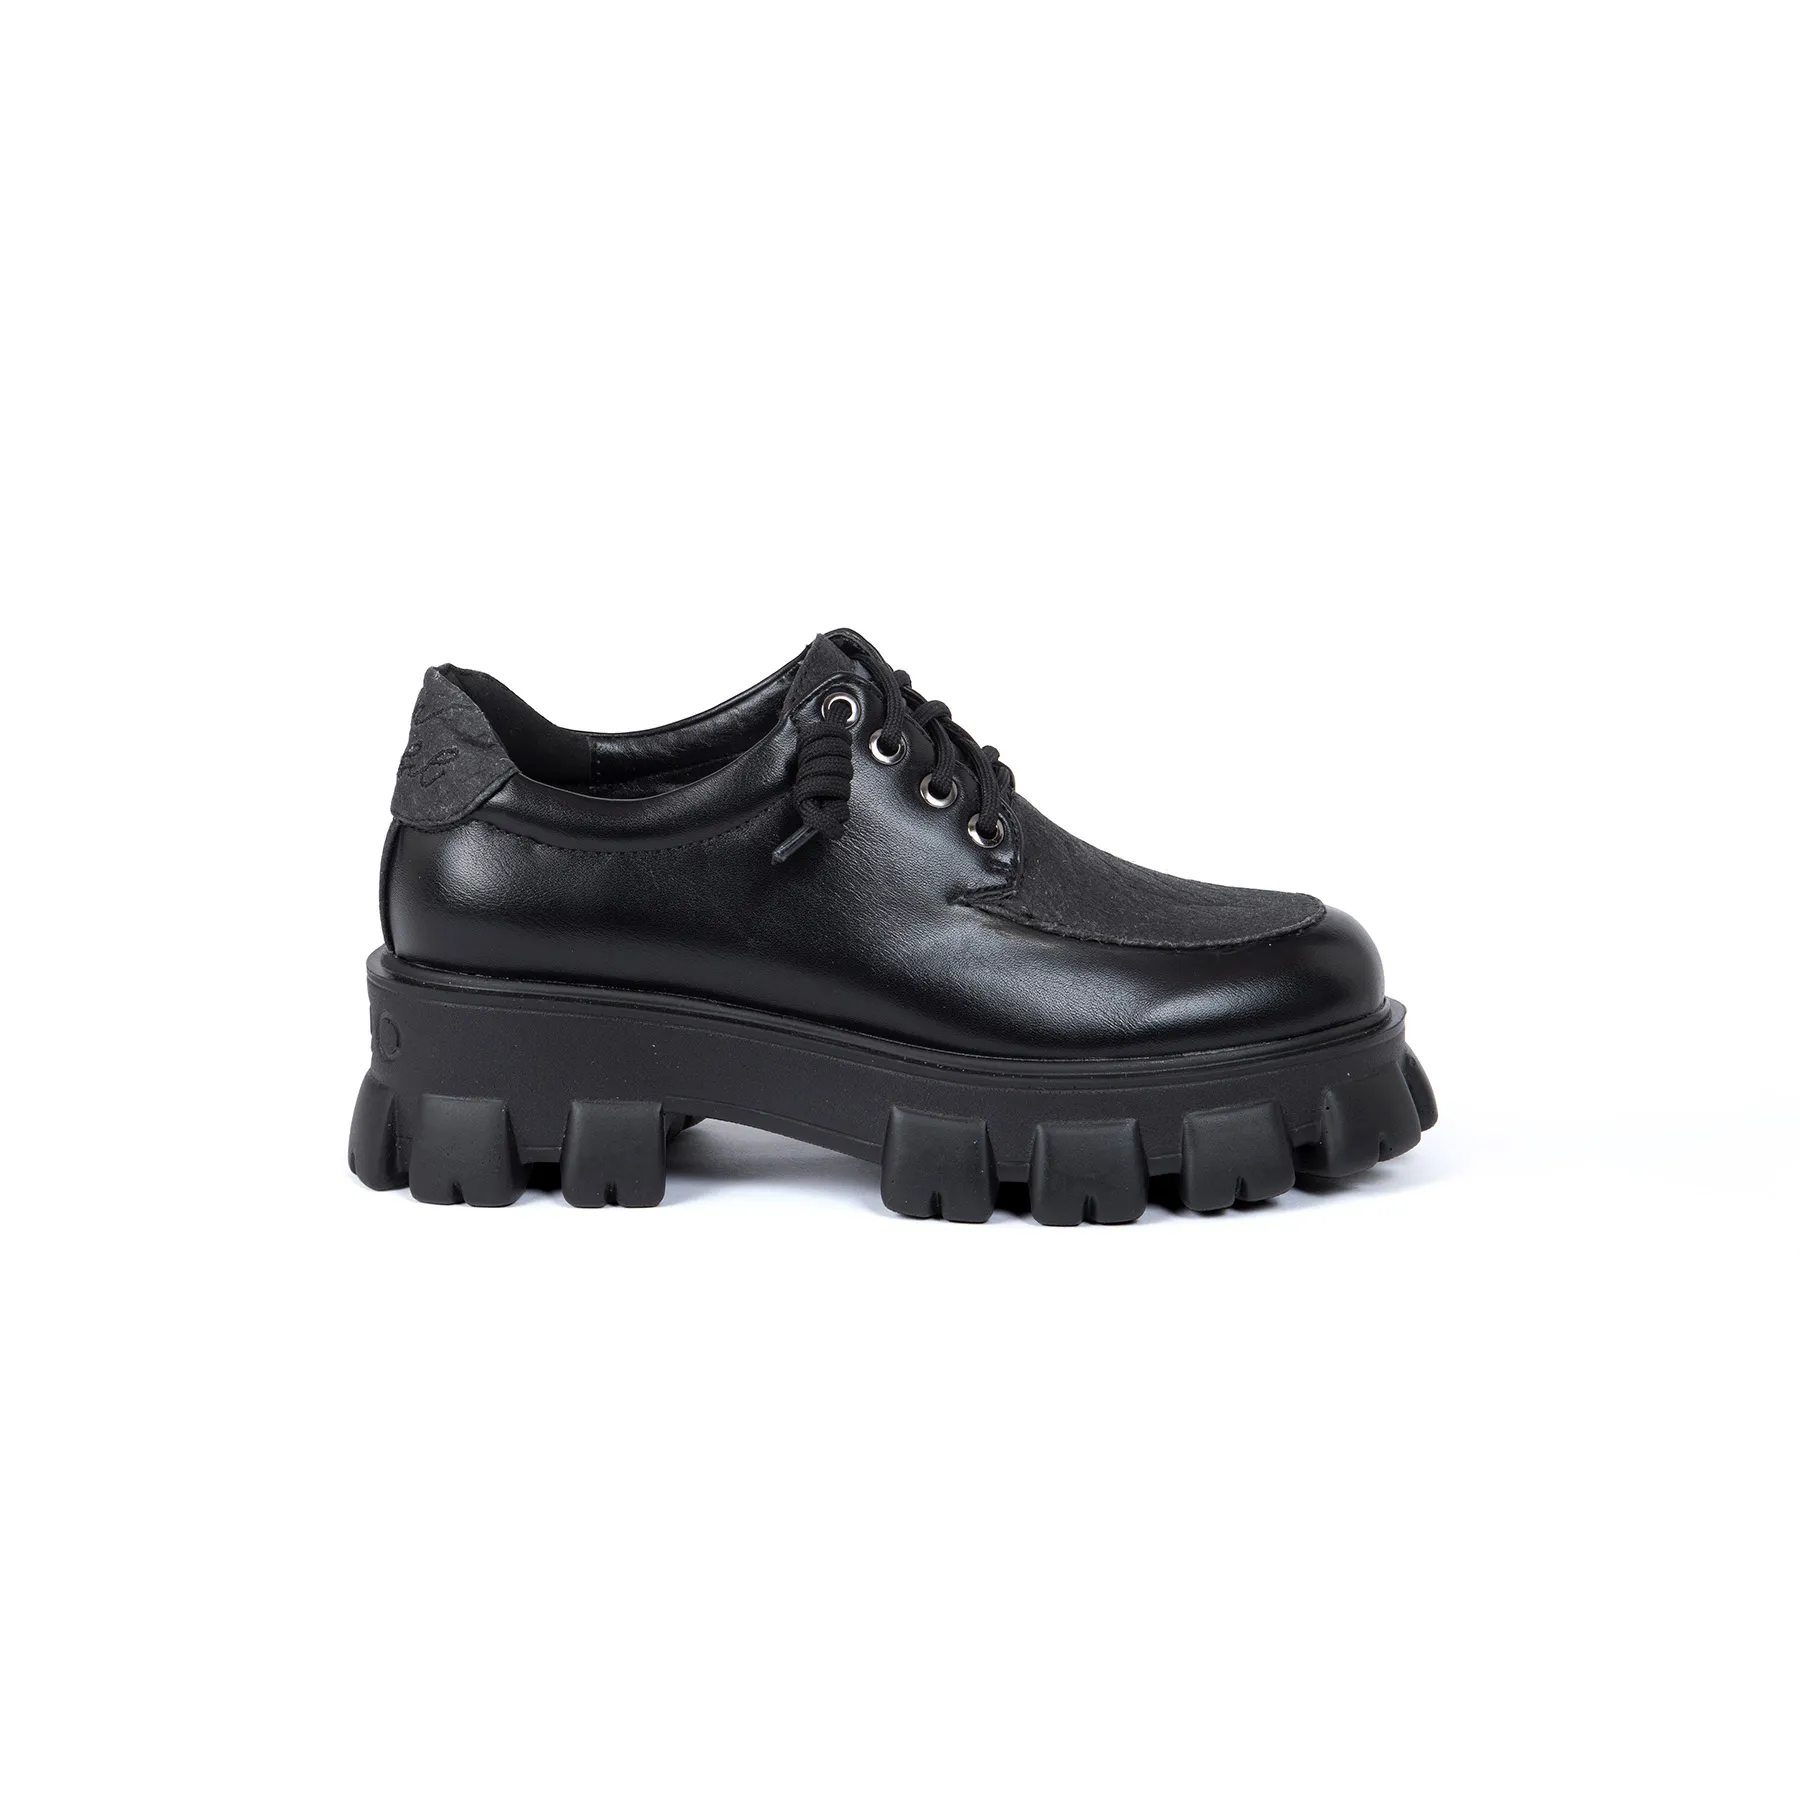 Clem Charcoal Oxford Shoe